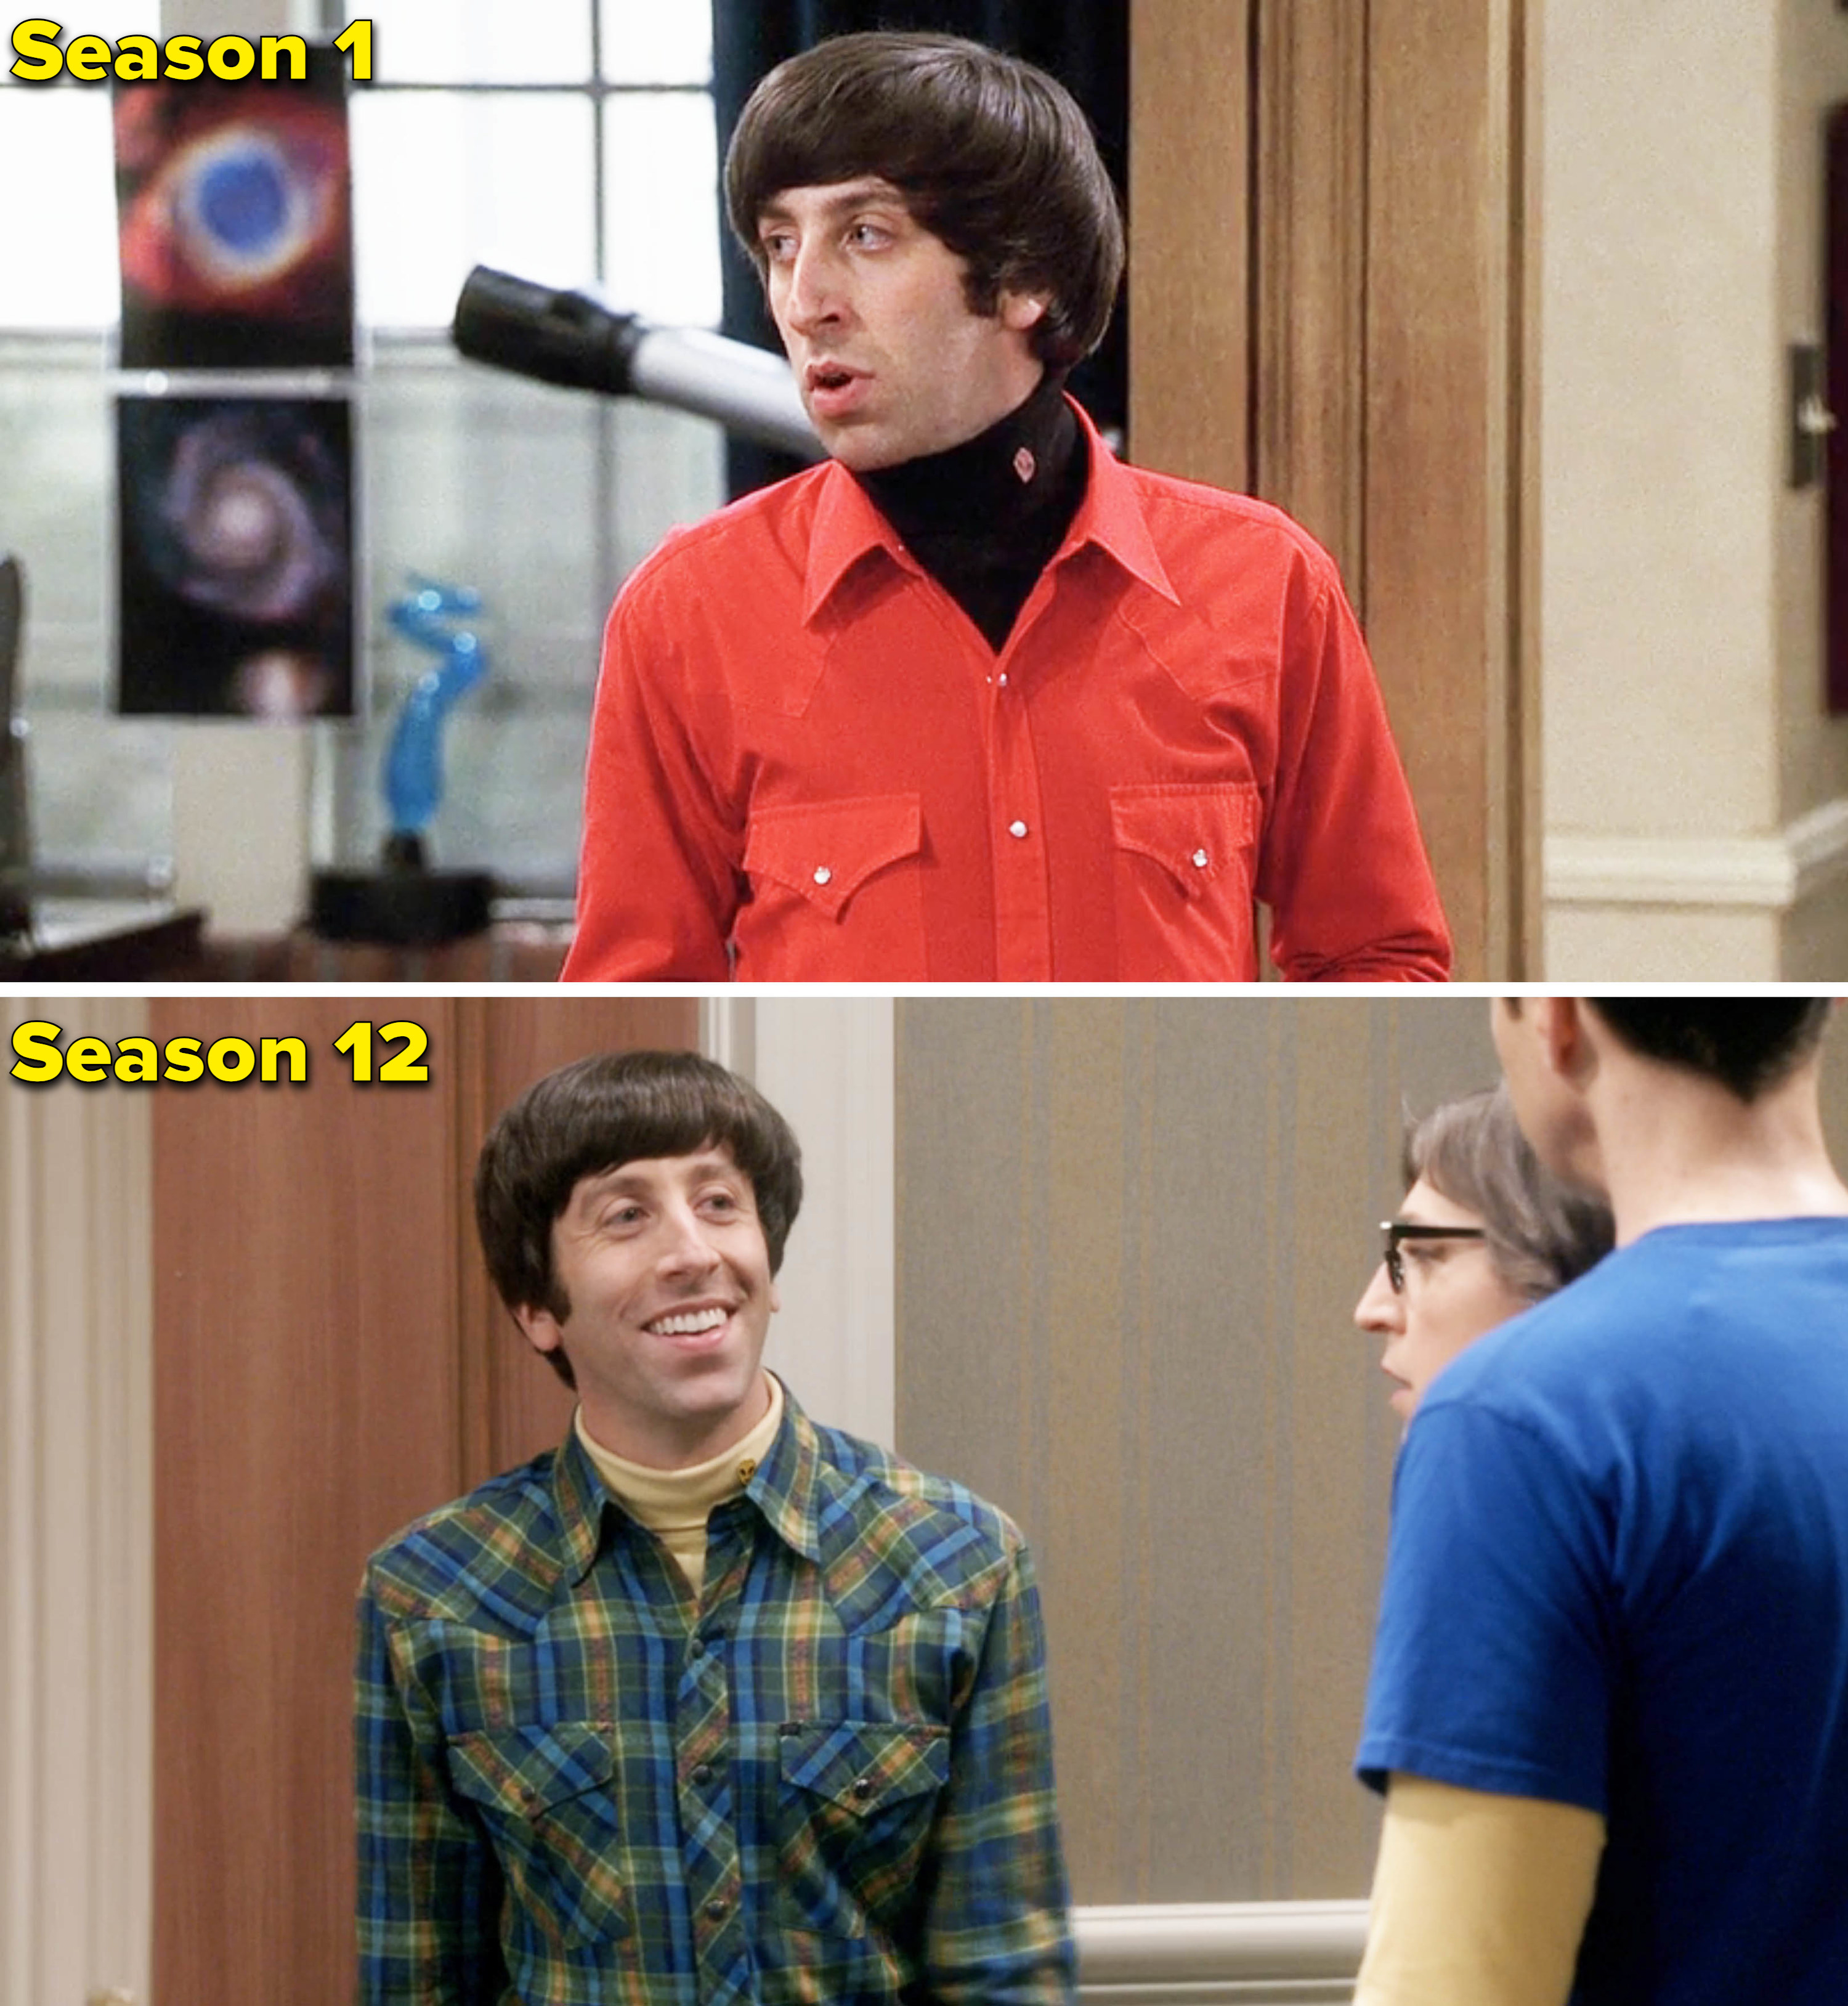 Simon in seasons 1 and 12